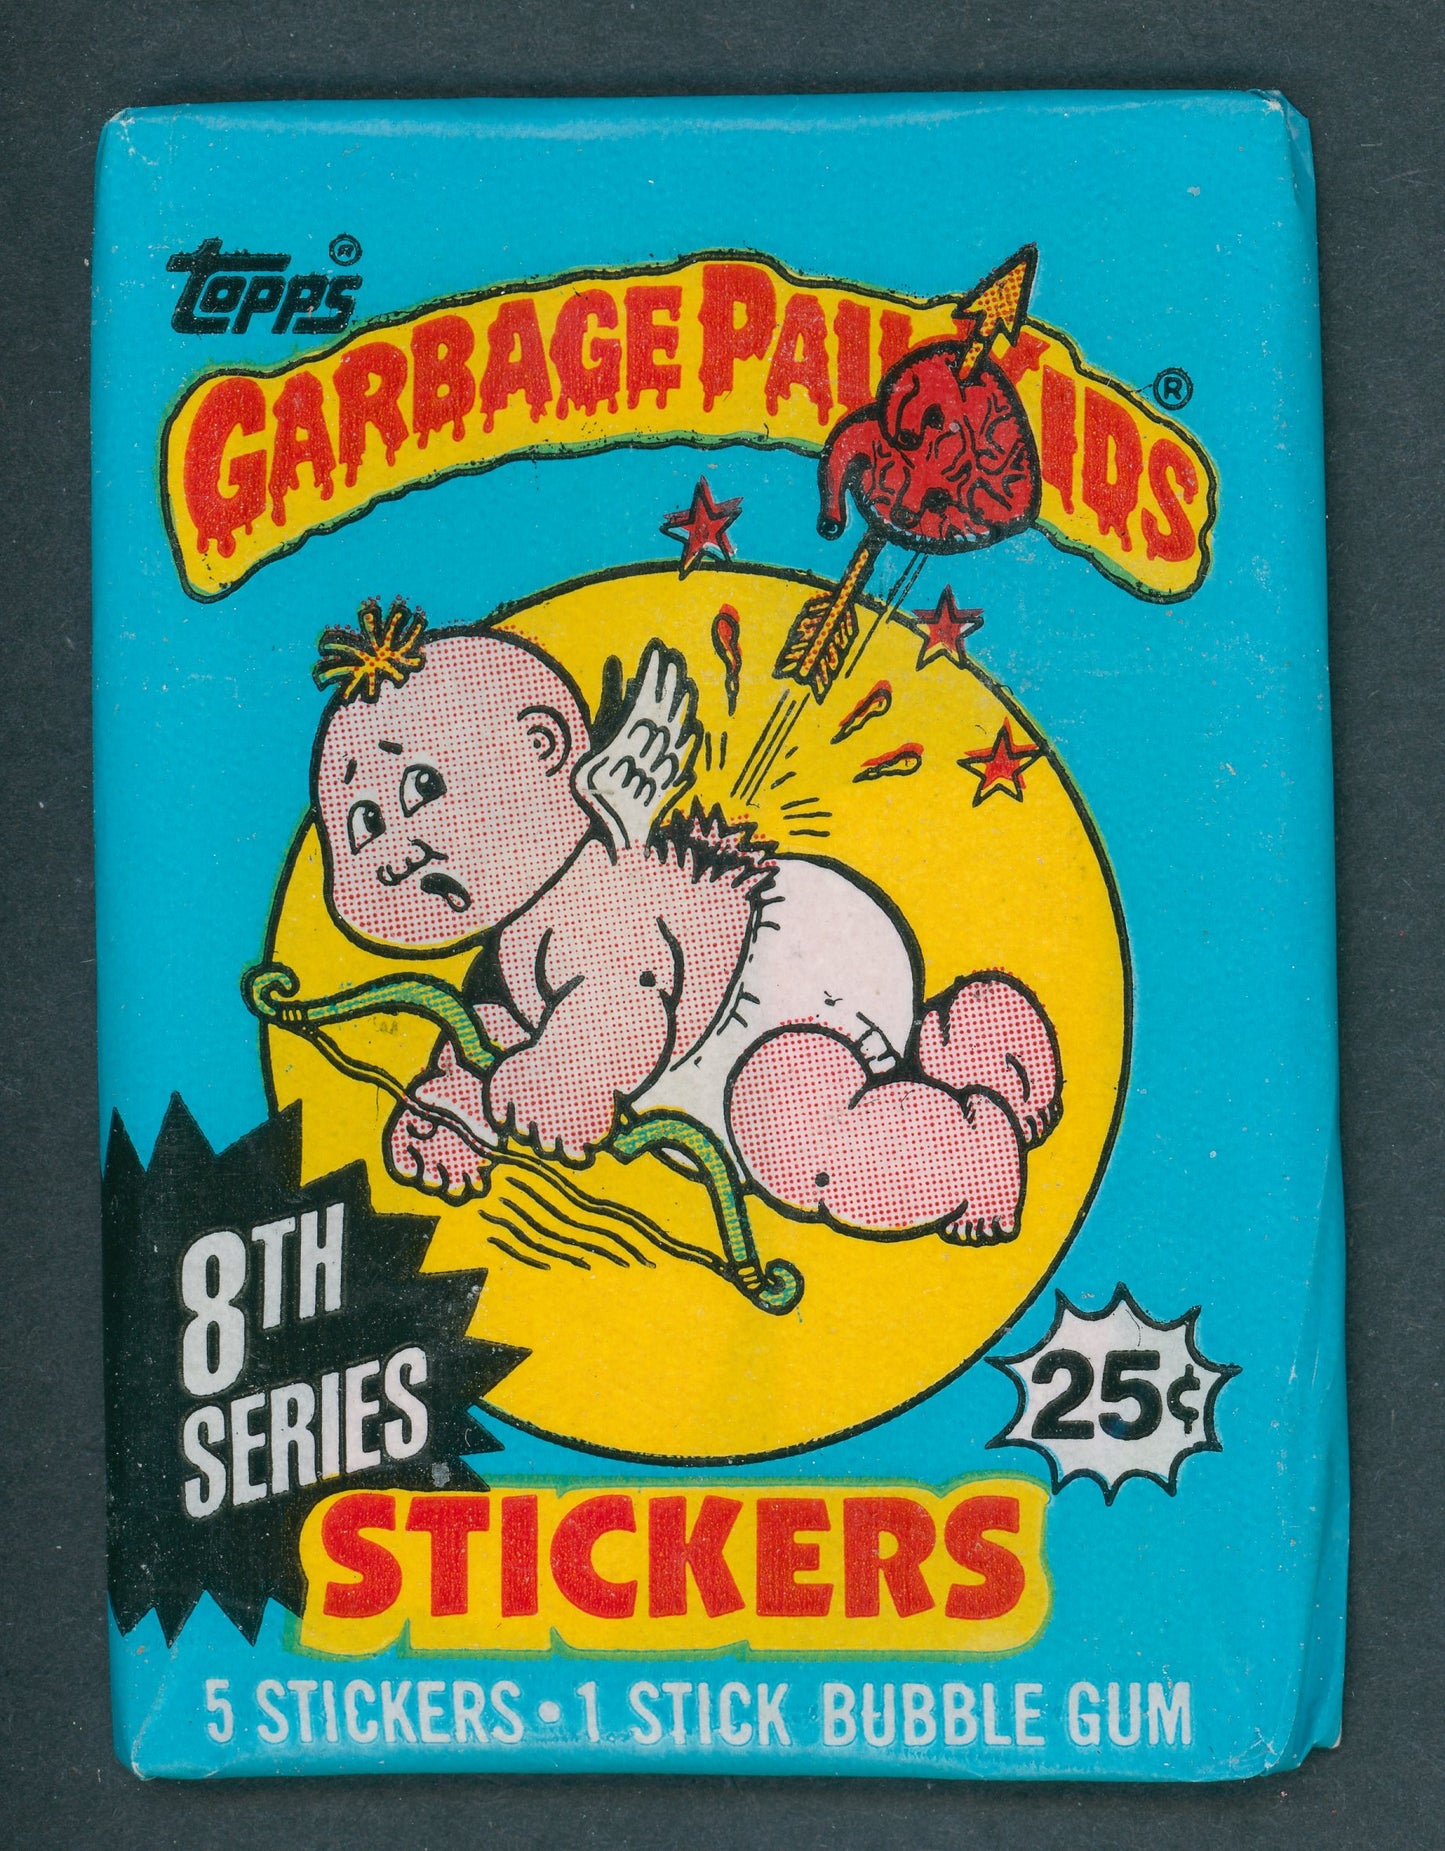 1987 Topps Garbage Pail Kids Series 8 Unopened Wax Pack (w/ price)